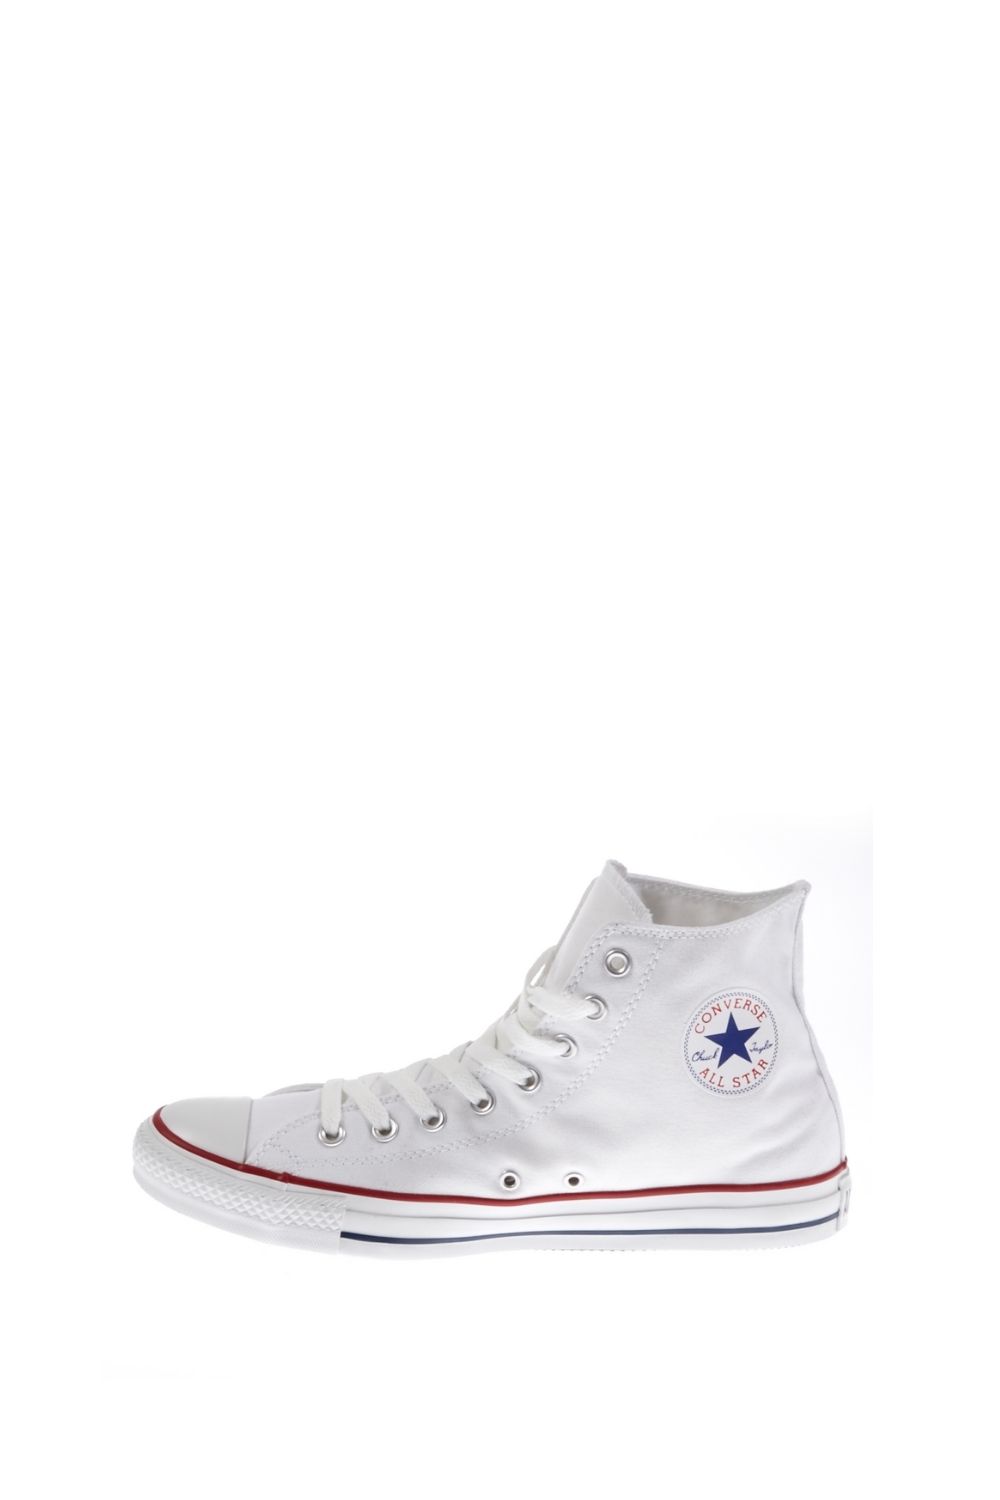 CONVERSE - Unisex μποτάκια Chuck Taylor λευκά Ανδρικά/Παπούτσια/Sneakers